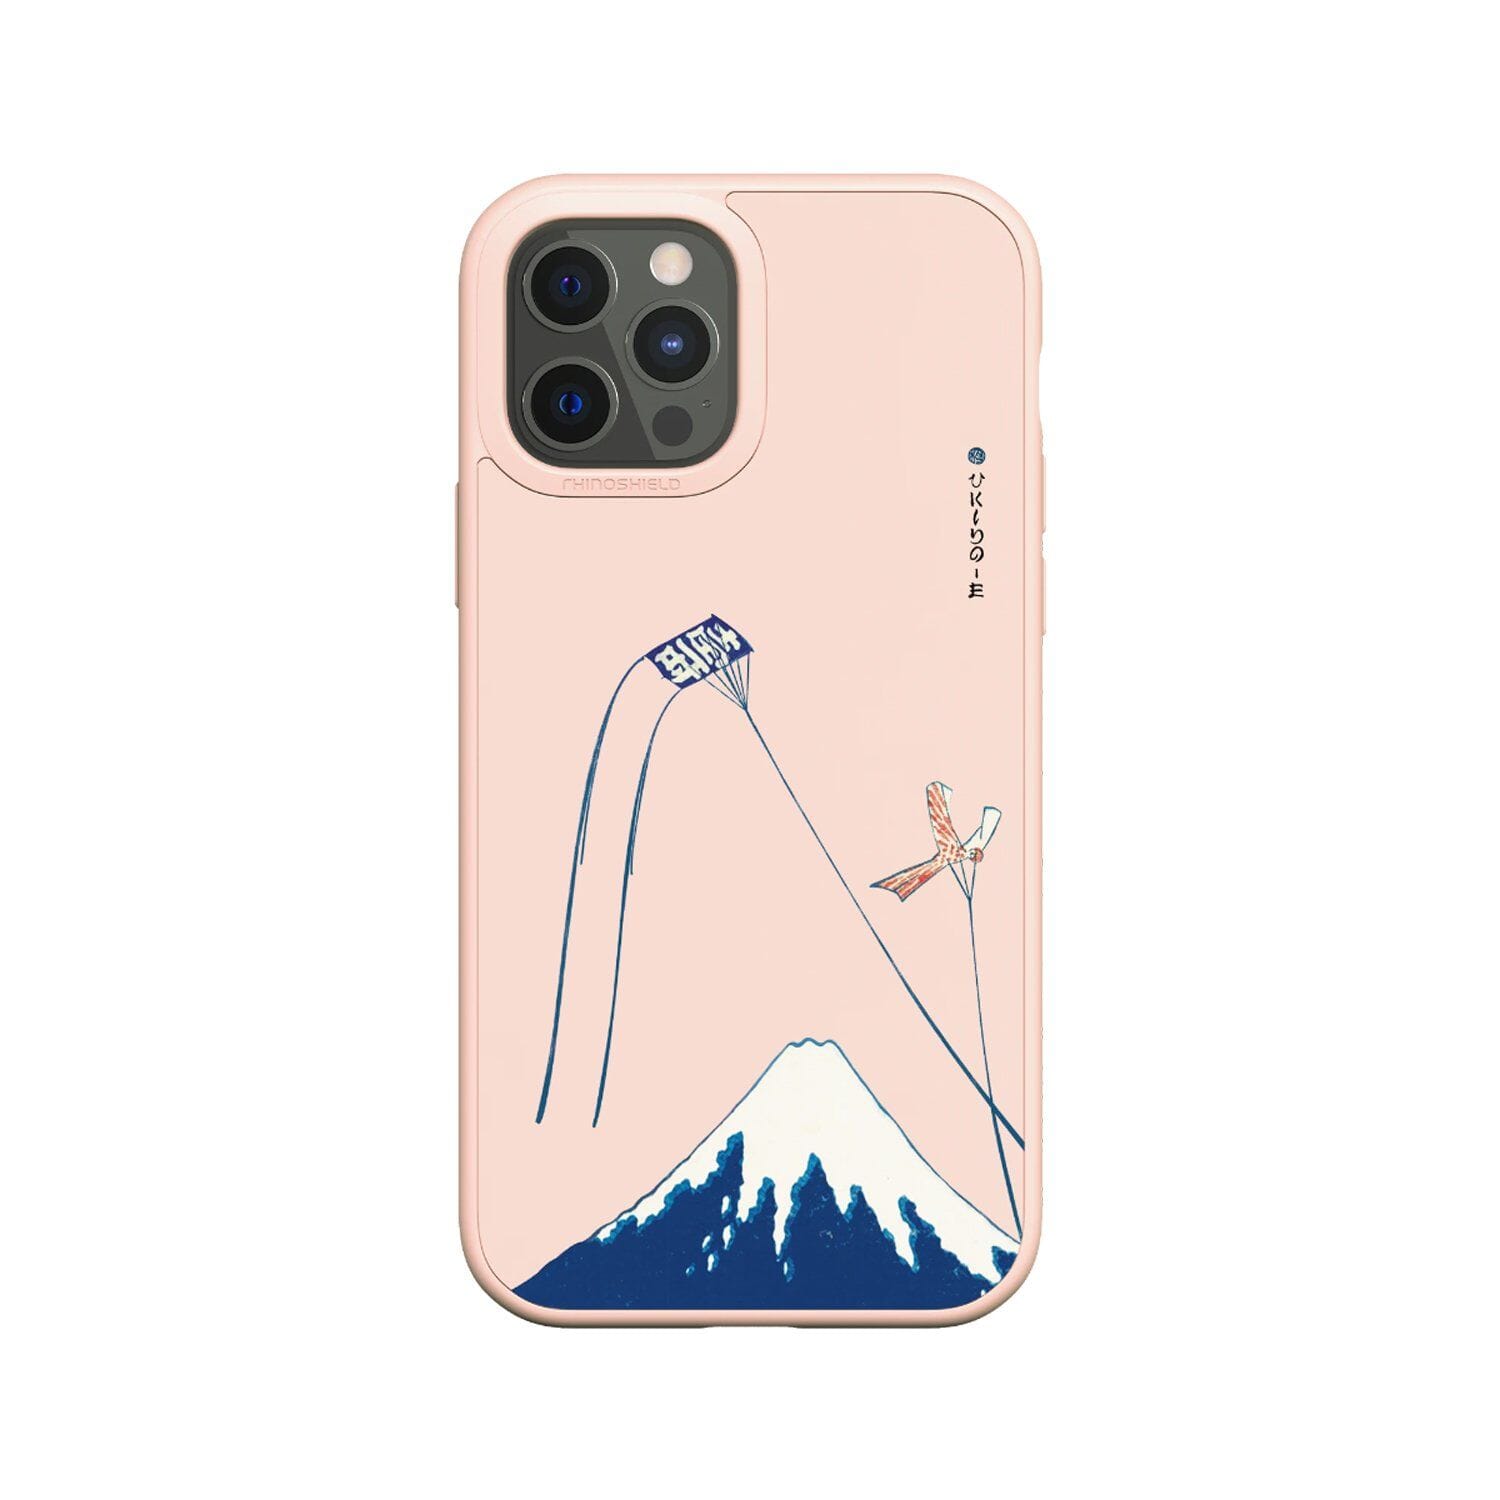 RhinoShield SolidSuit Design Case for iPhone 12 Series (2020) Default RhinoShield iPhone 12 Pro Max 6.7" Pink/Mount Fuji 